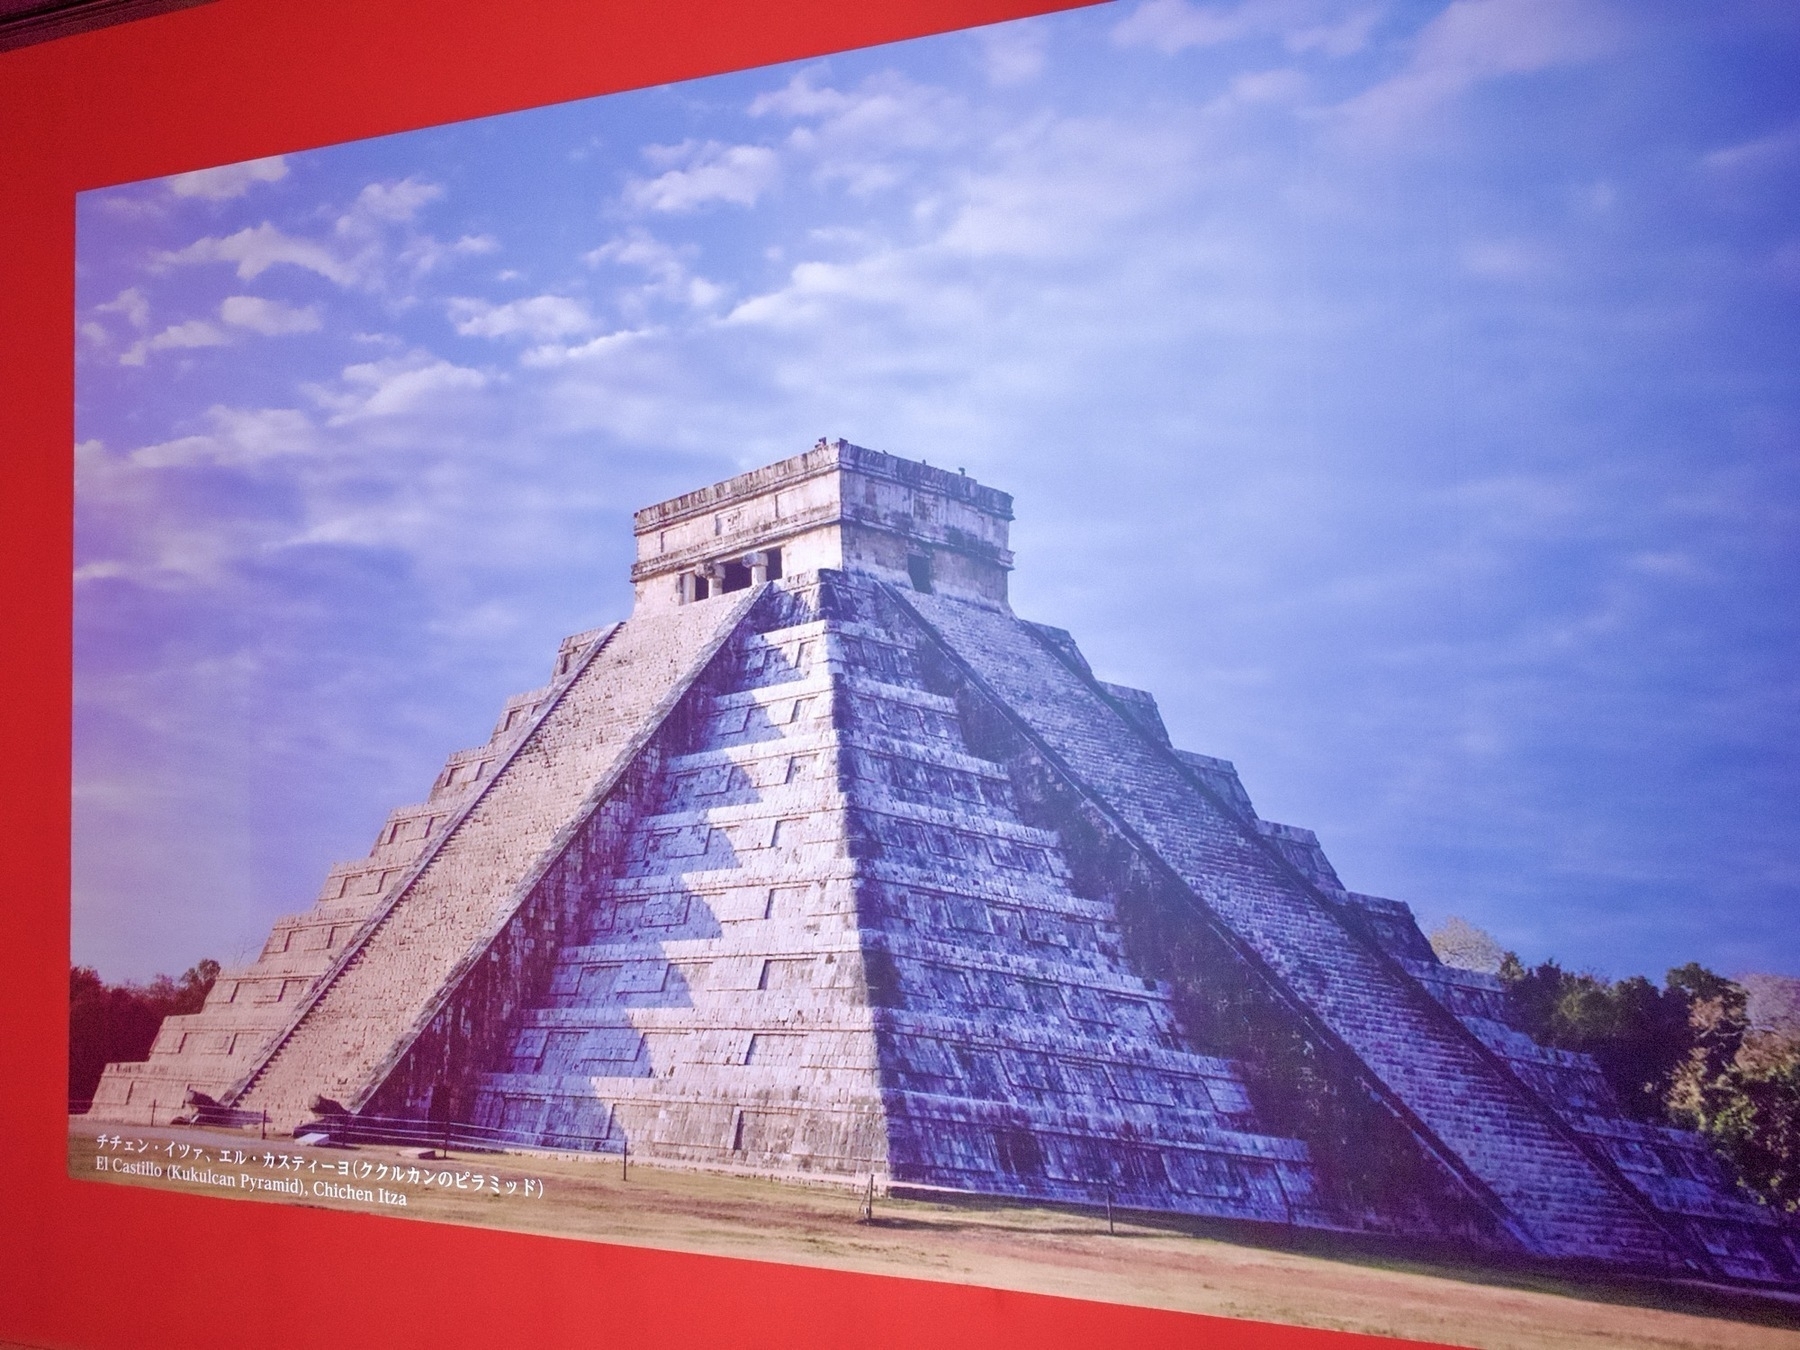 Wall image of El Castillo the Kukulcan Pyramid at Chichen Itza